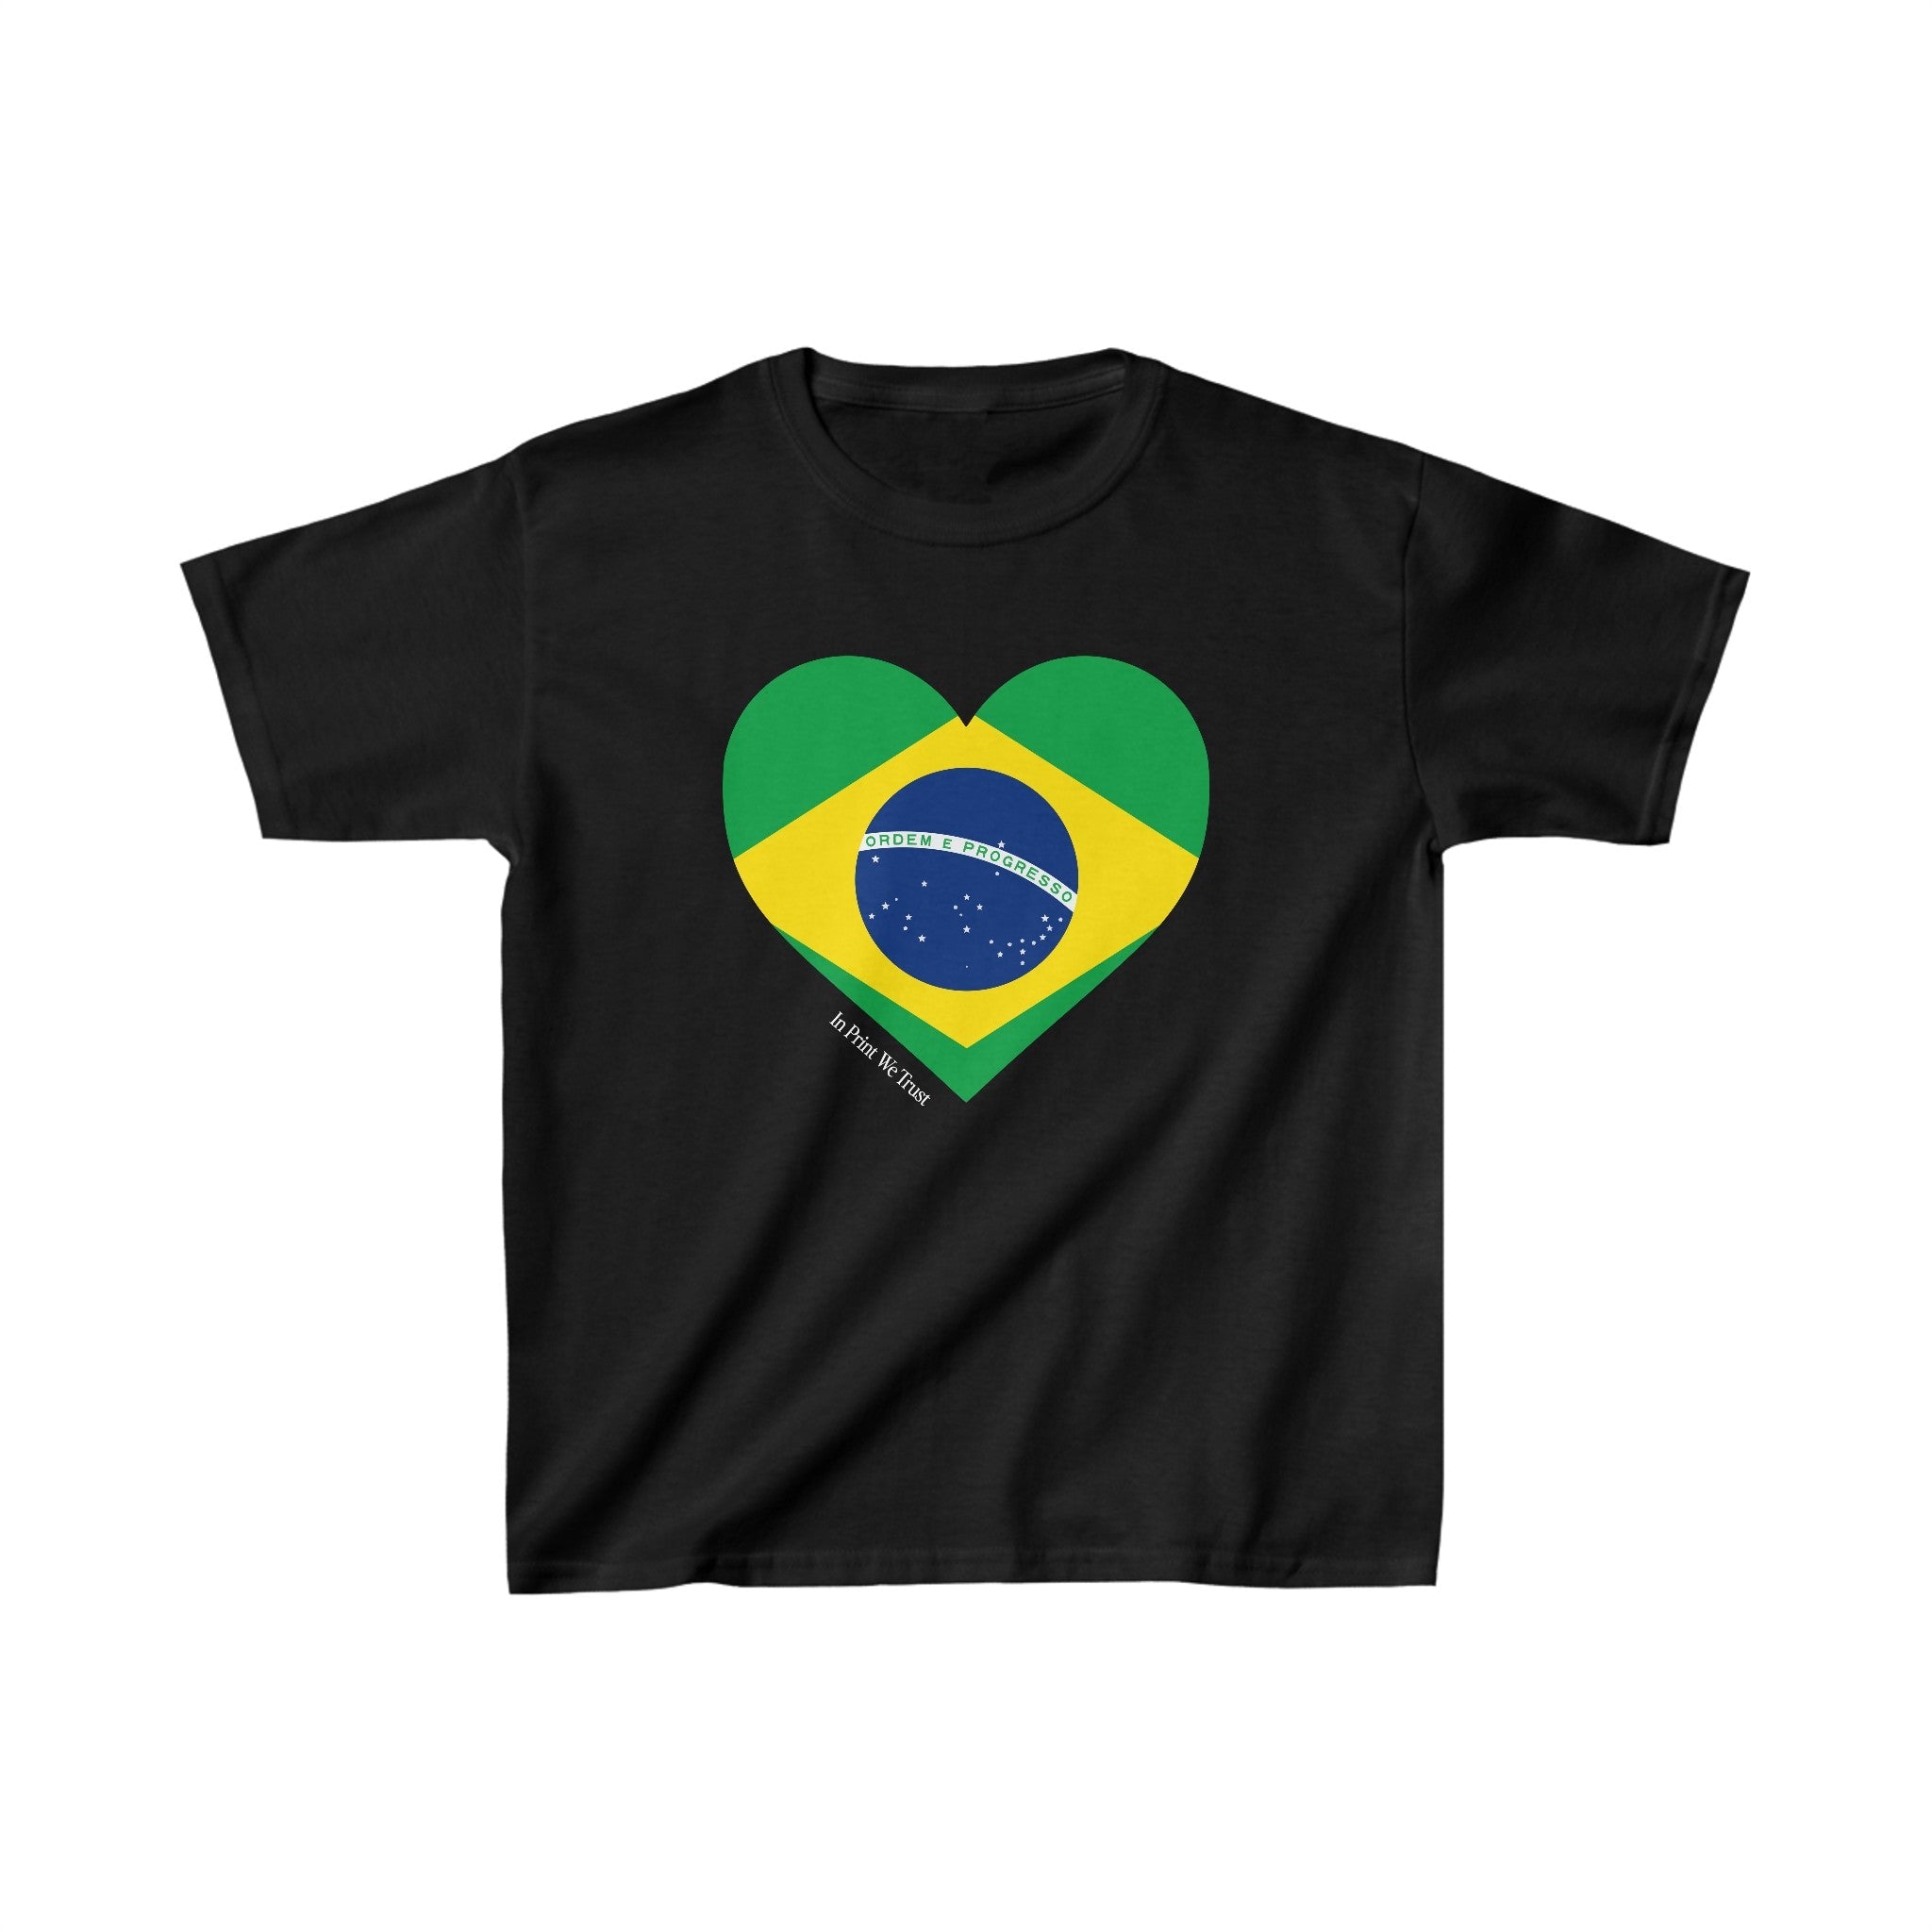 'Brazil' baby tee - In Print We Trust